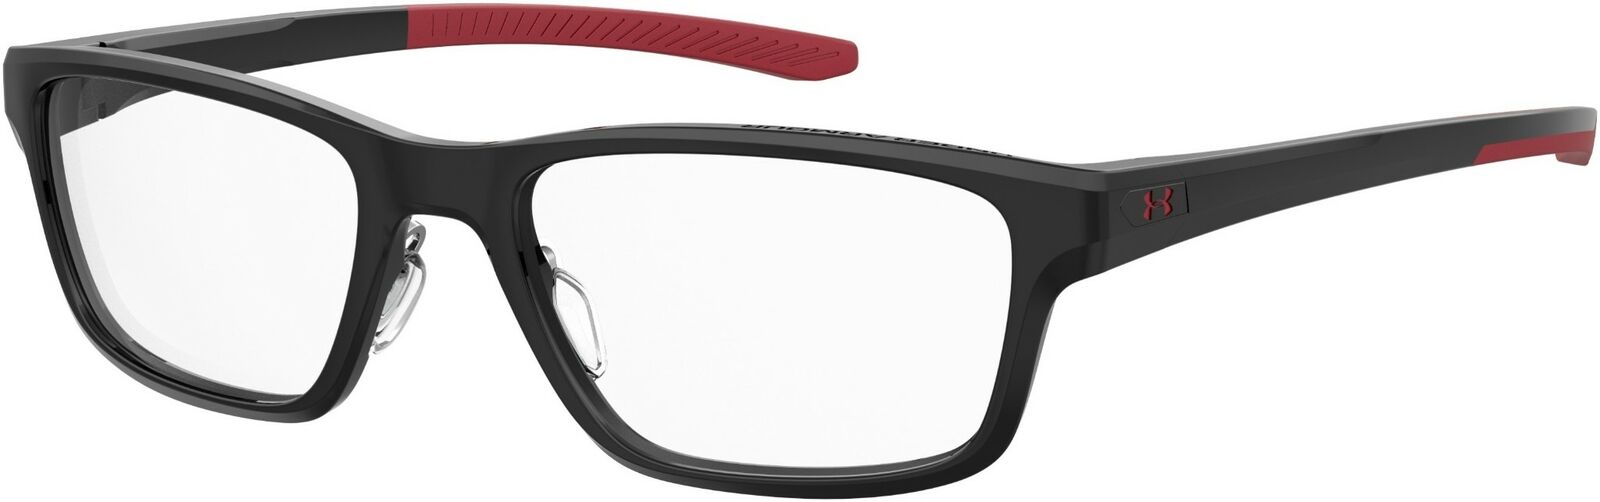 Under Armour Ua 5000/G 0807 Black Red Rectangle Men's Eyeglasses